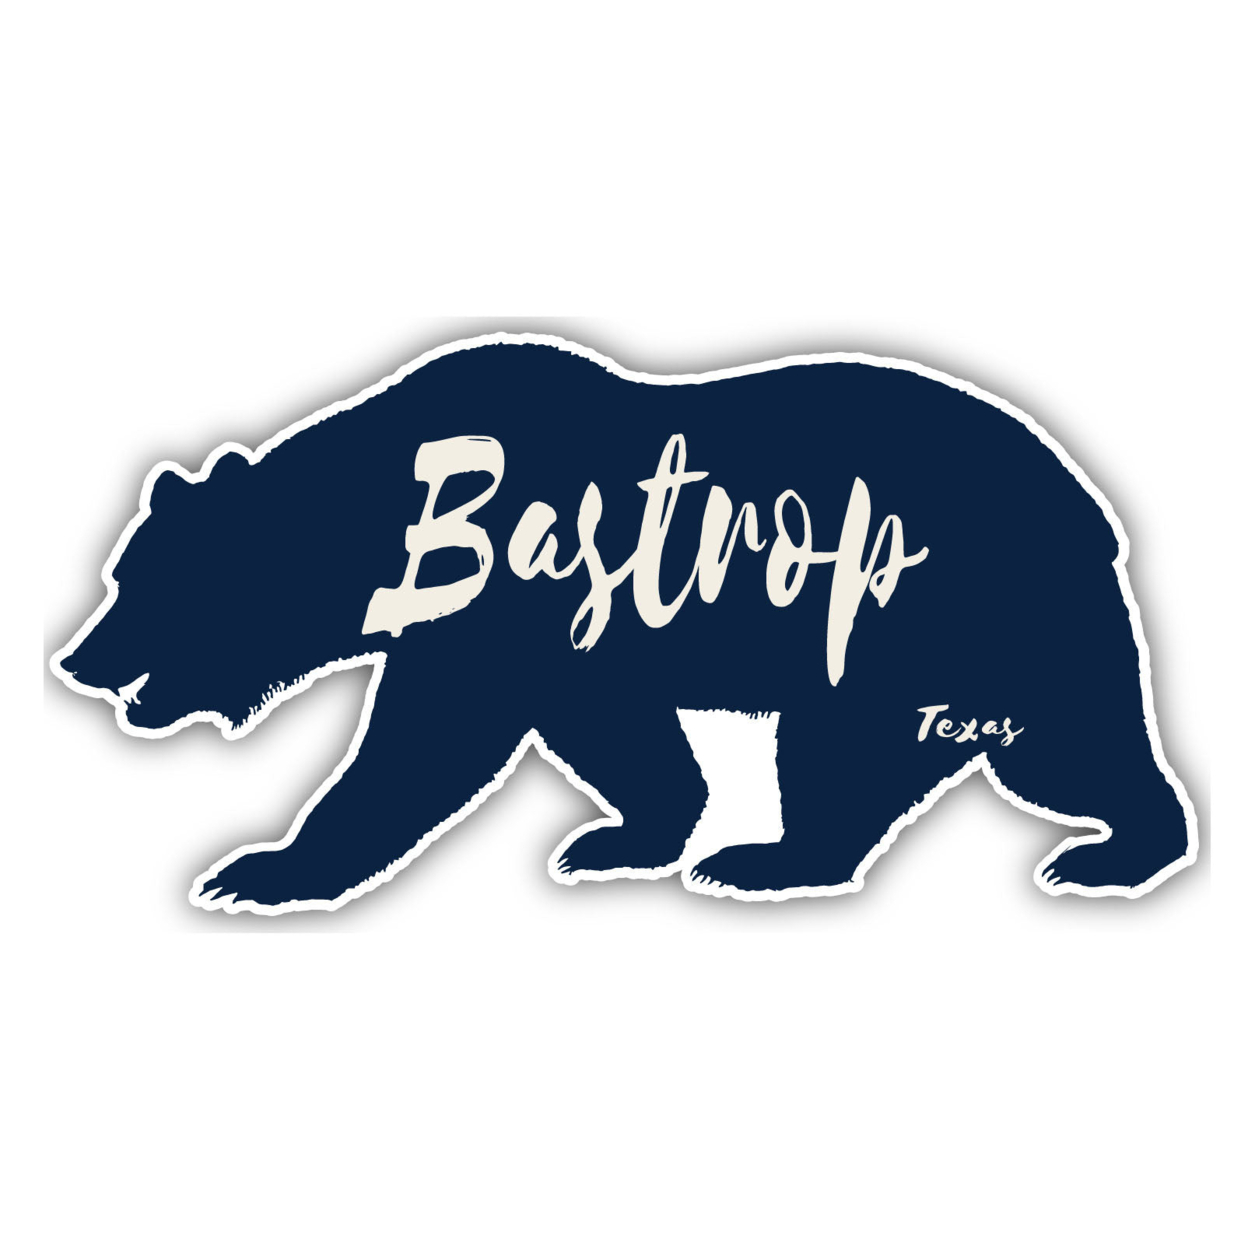 Bastrop Texas Souvenir Decorative Stickers (Choose Theme And Size) - Single Unit, 8-Inch, Bear